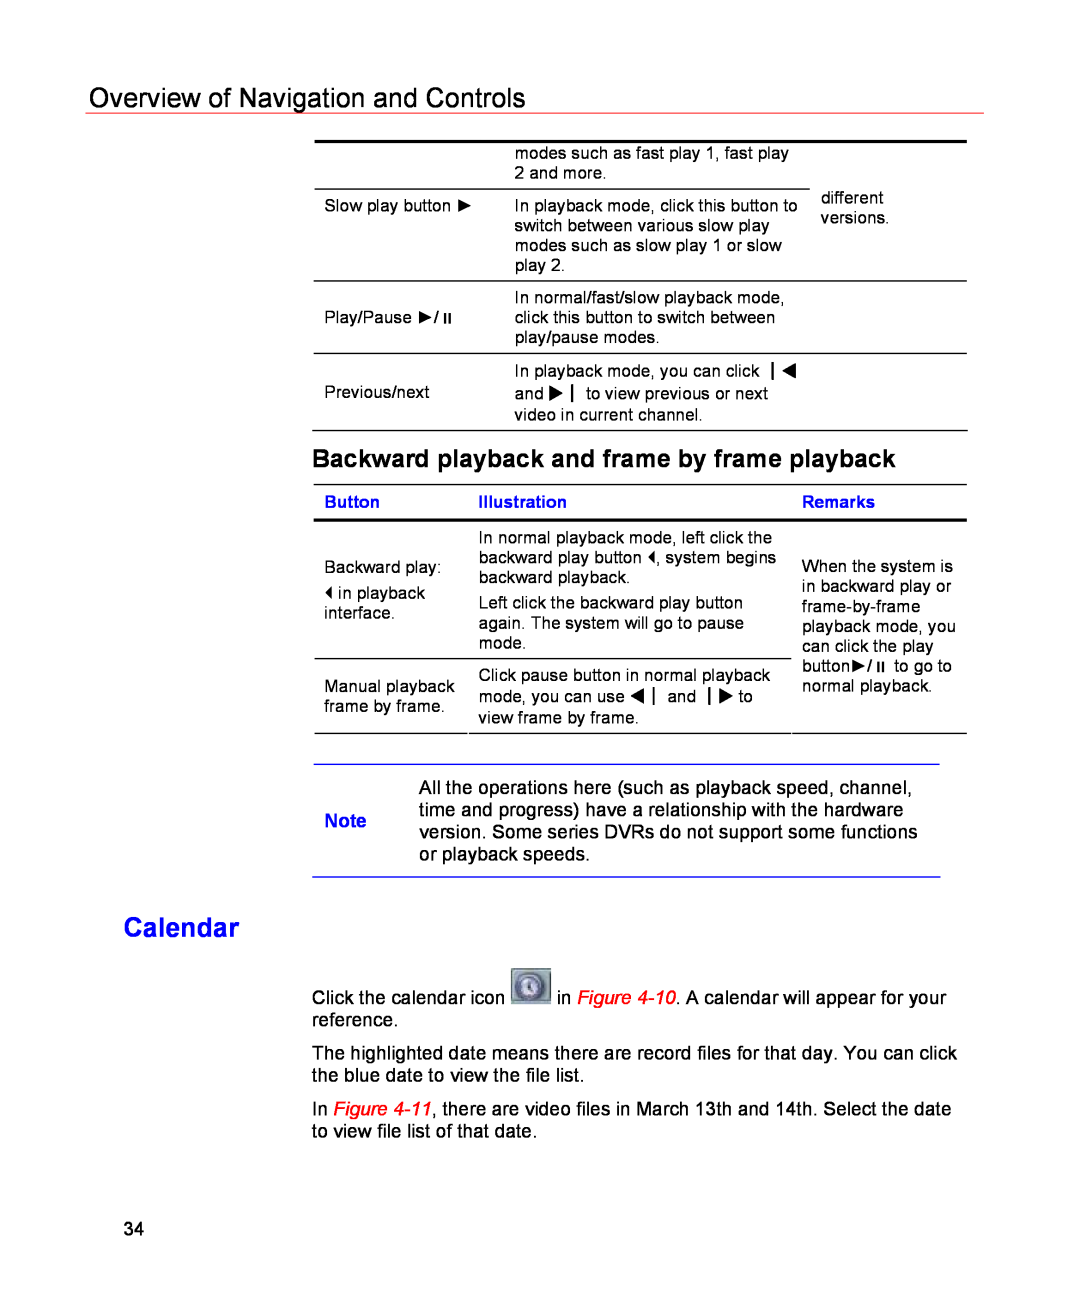 Honeywell HSVR-04, HSVR-16 Calendar, Backward playback and frame by frame playback, Overview of Navigation and Controls 